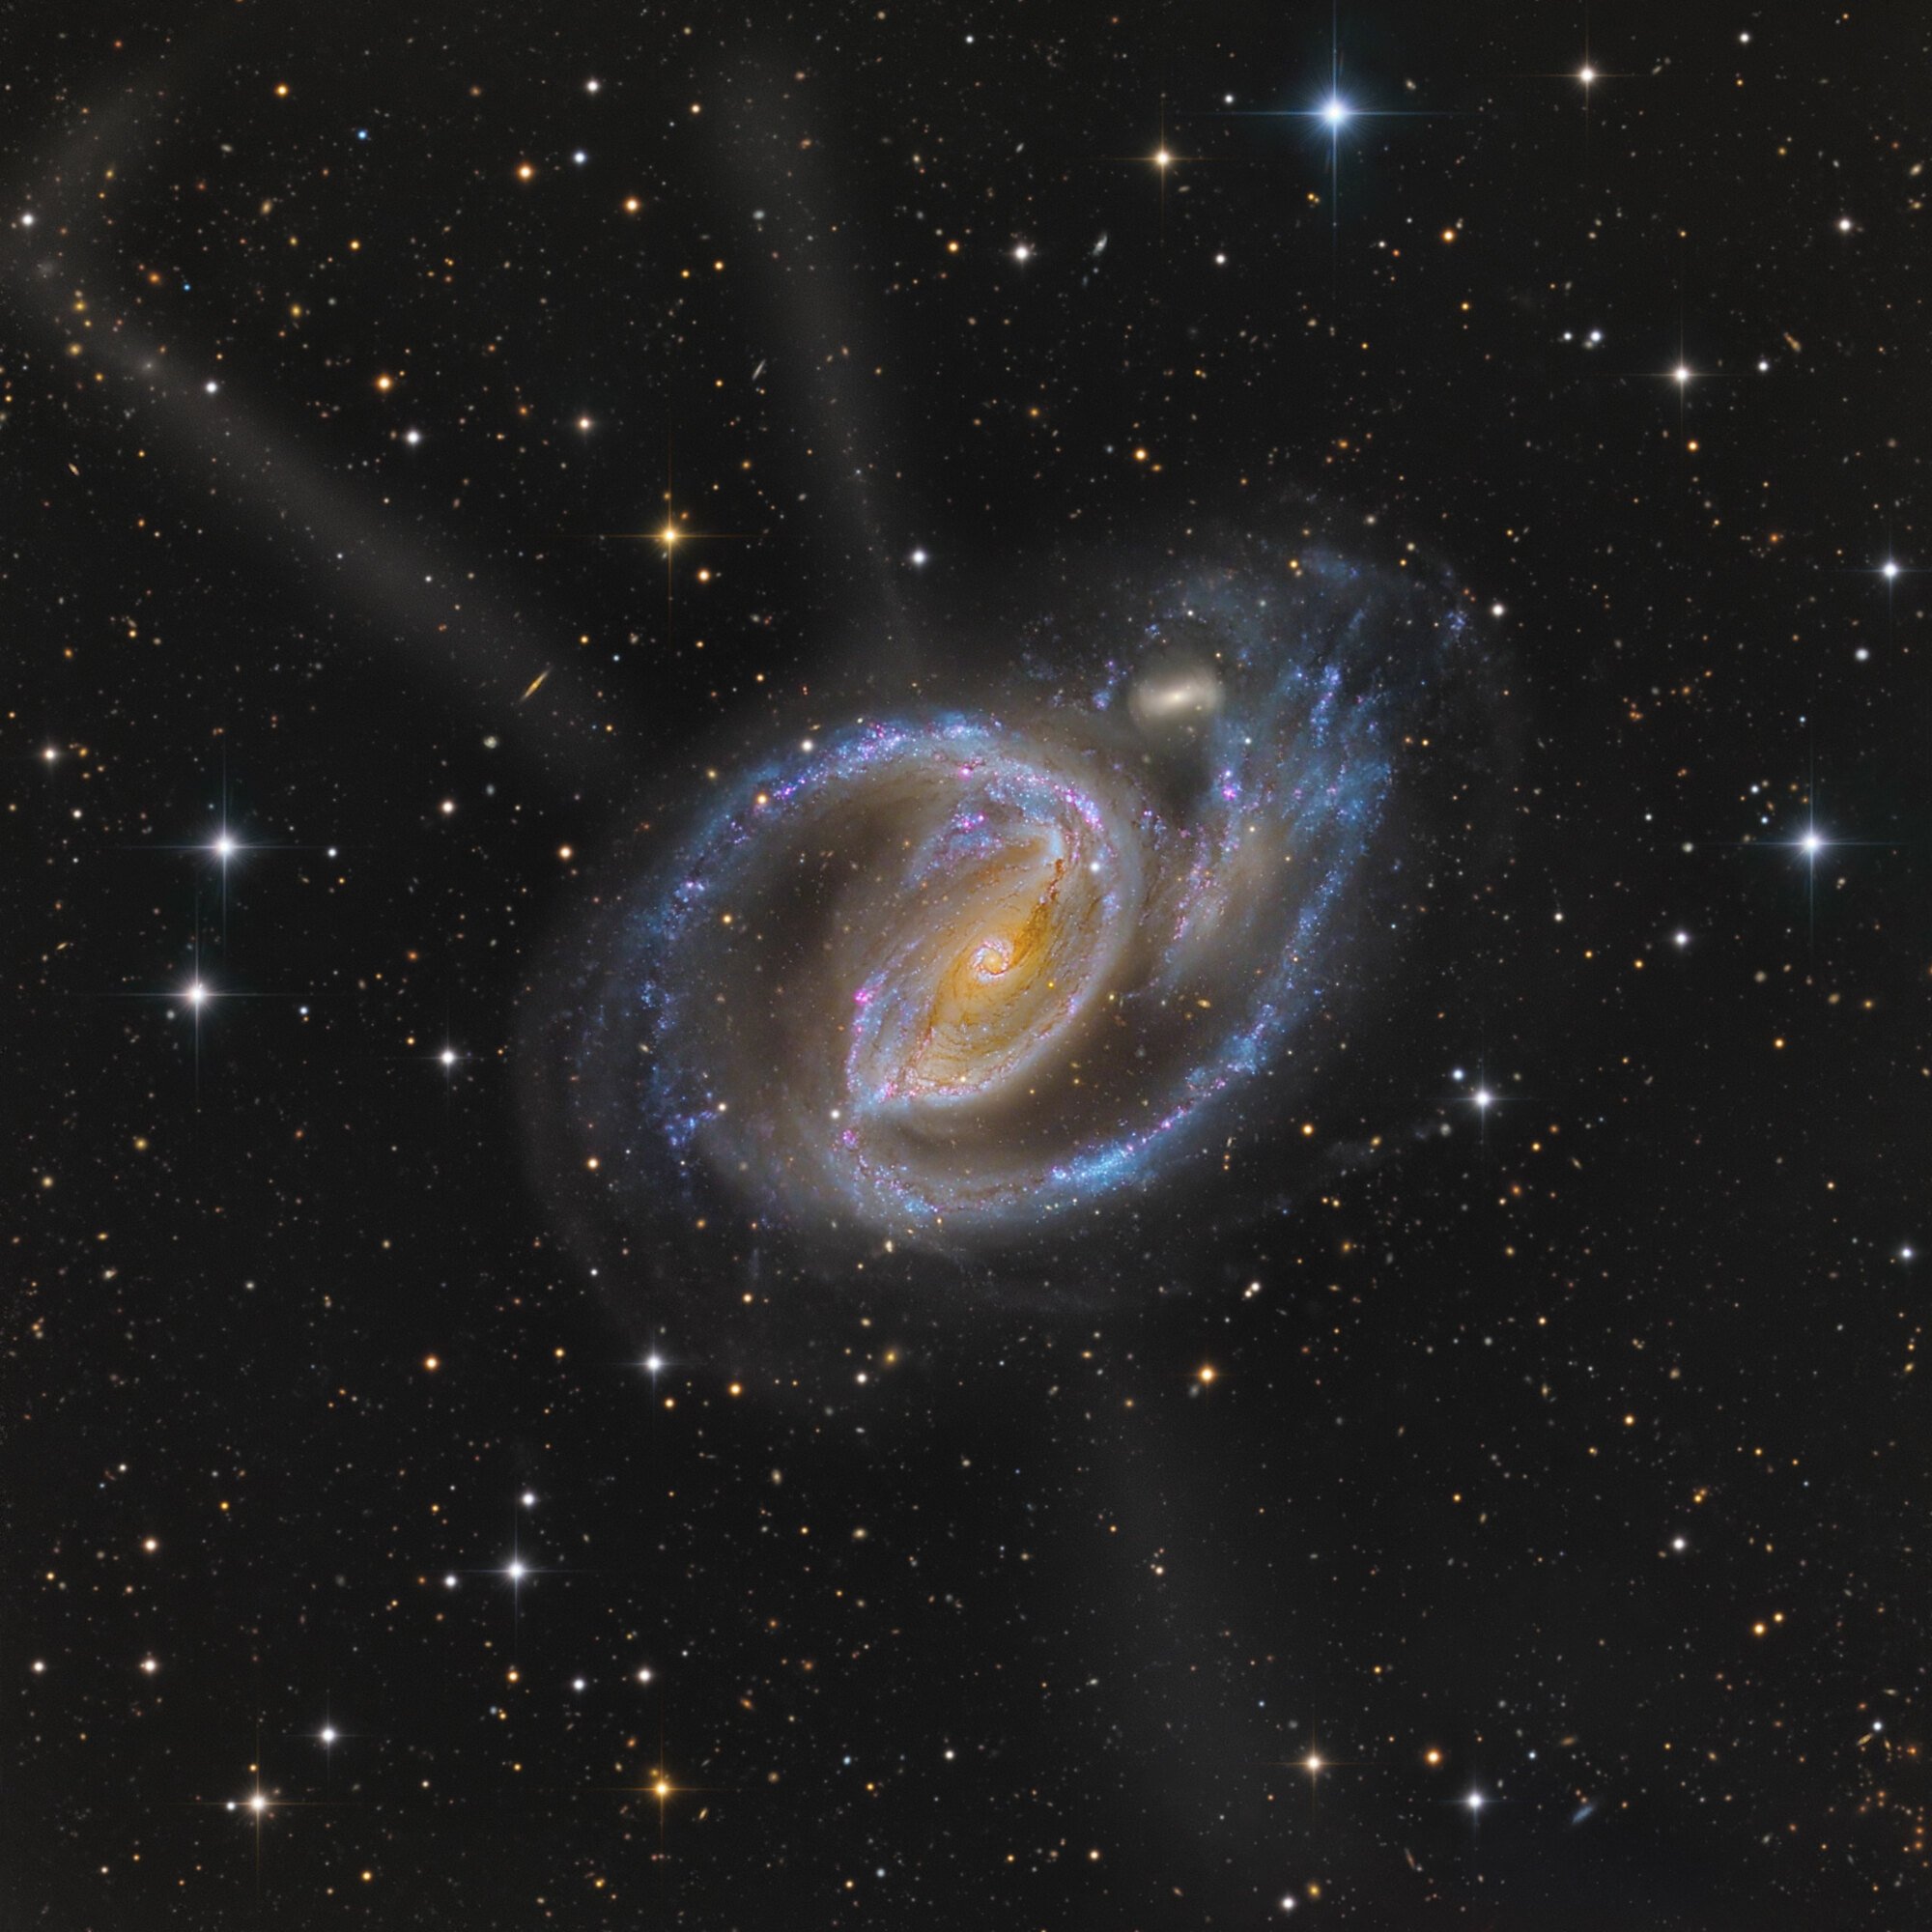 A spiral galaxy viewed in space.